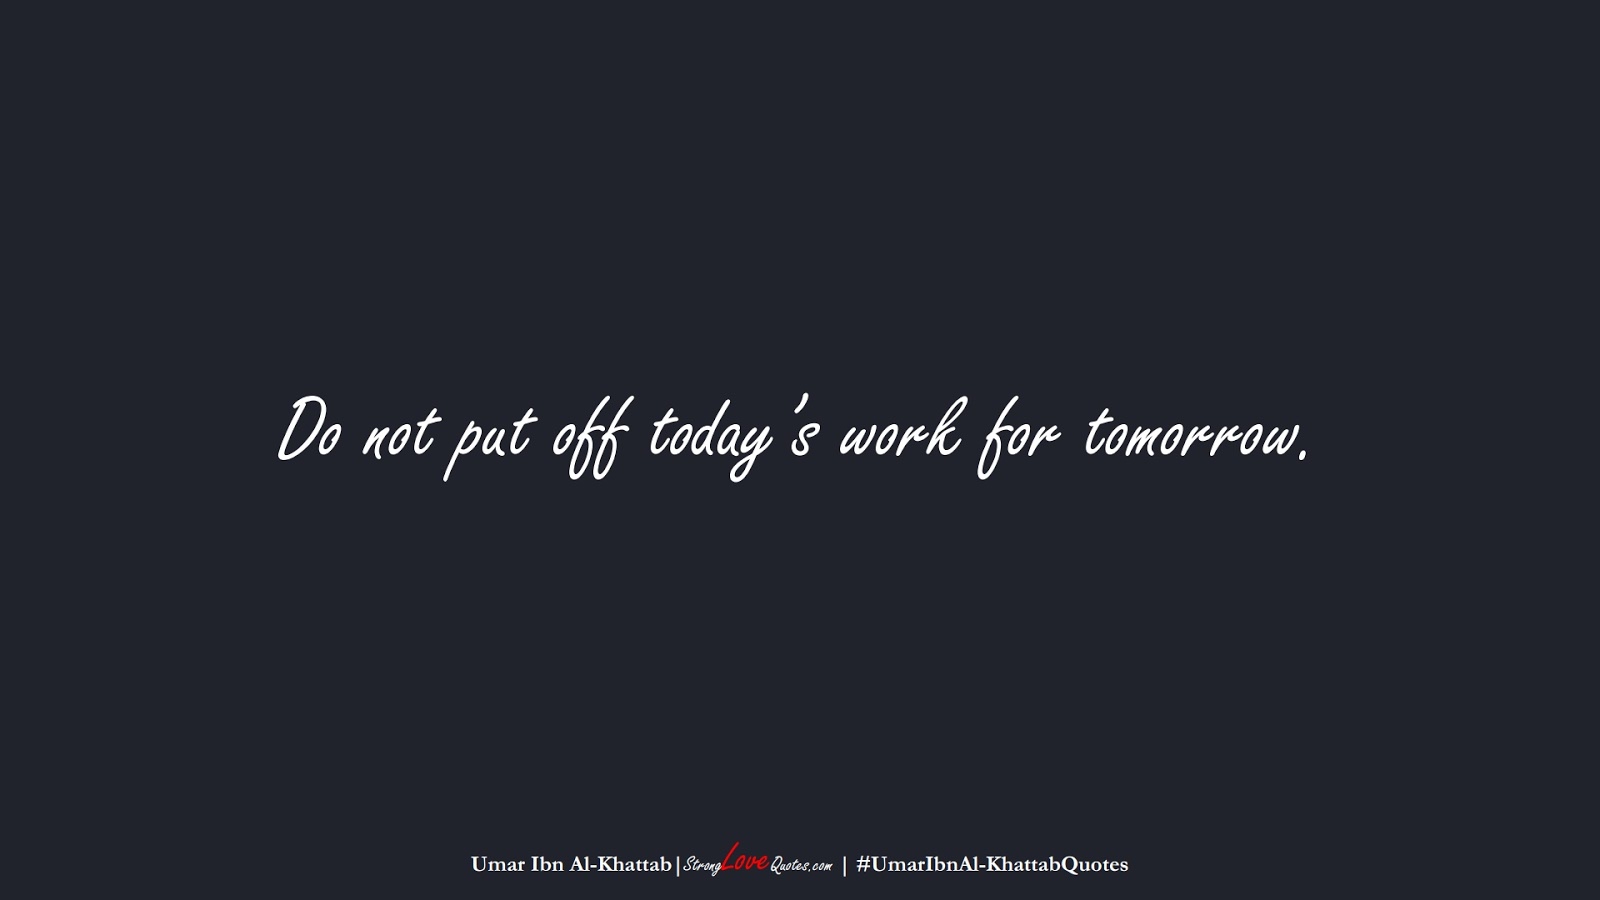 Do not put off today’s work for tomorrow. (Umar Ibn Al-Khattab);  #UmarIbnAl-KhattabQuotes